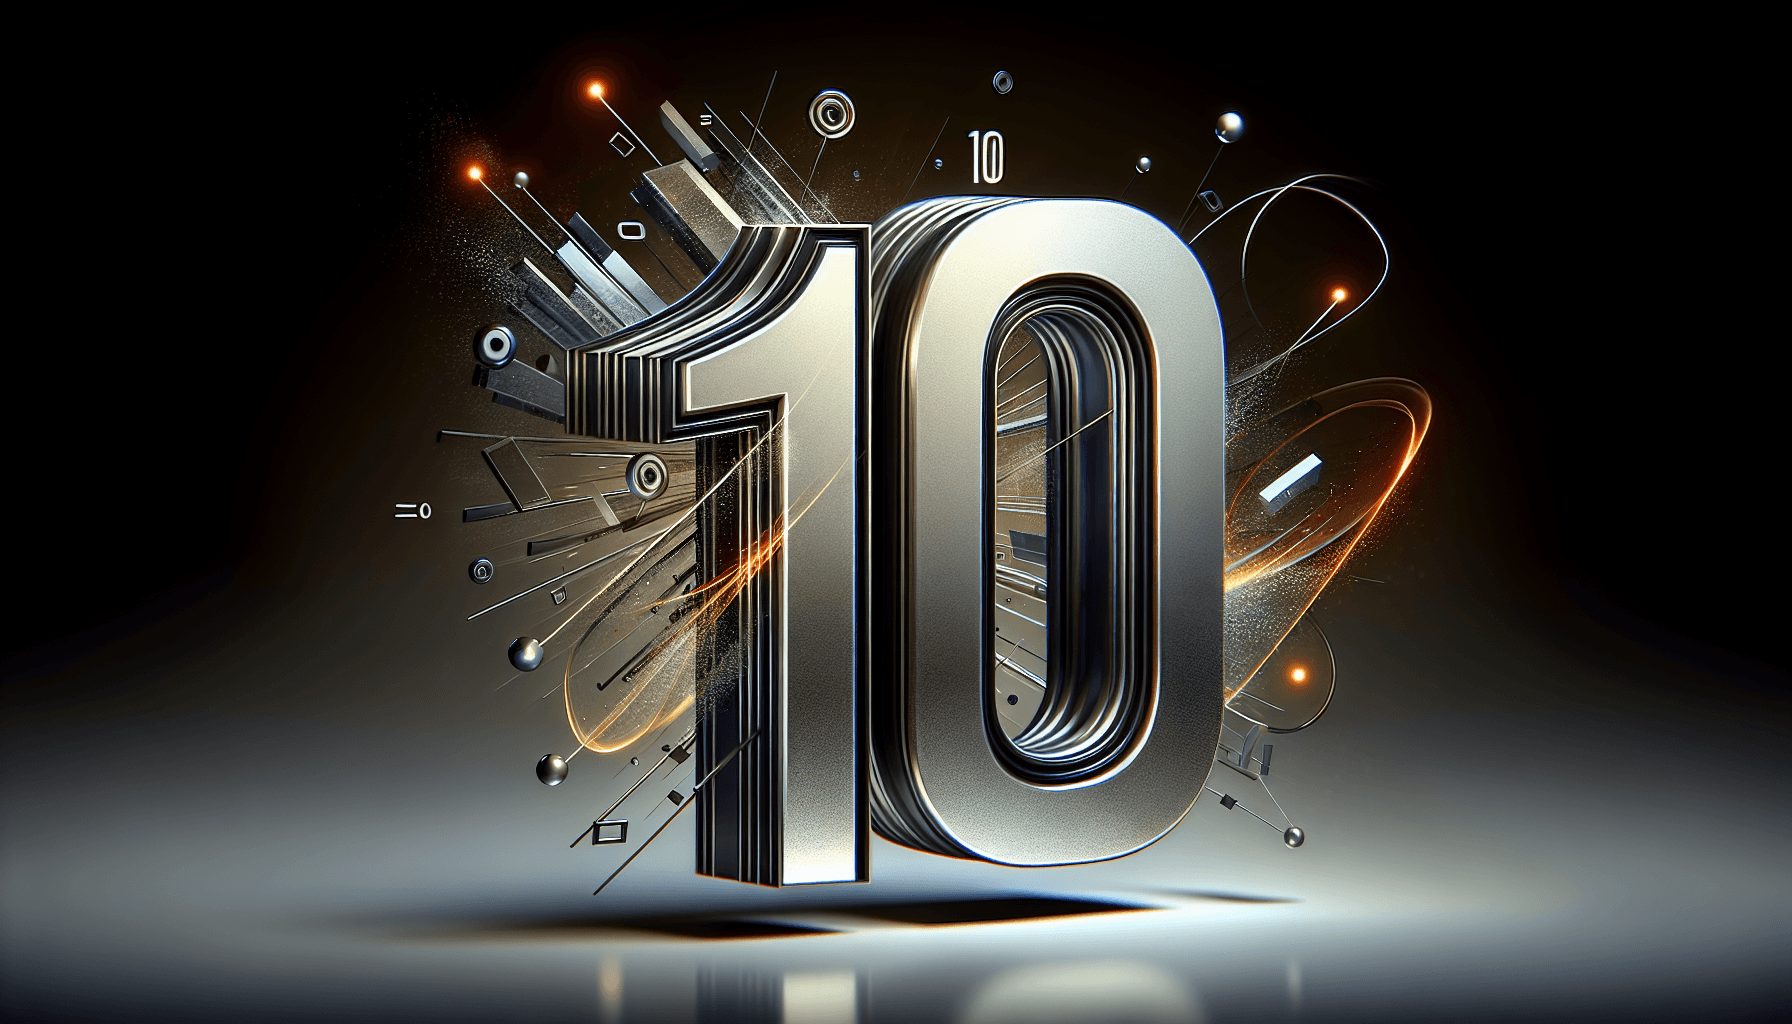 A modern image illustrating the number 10